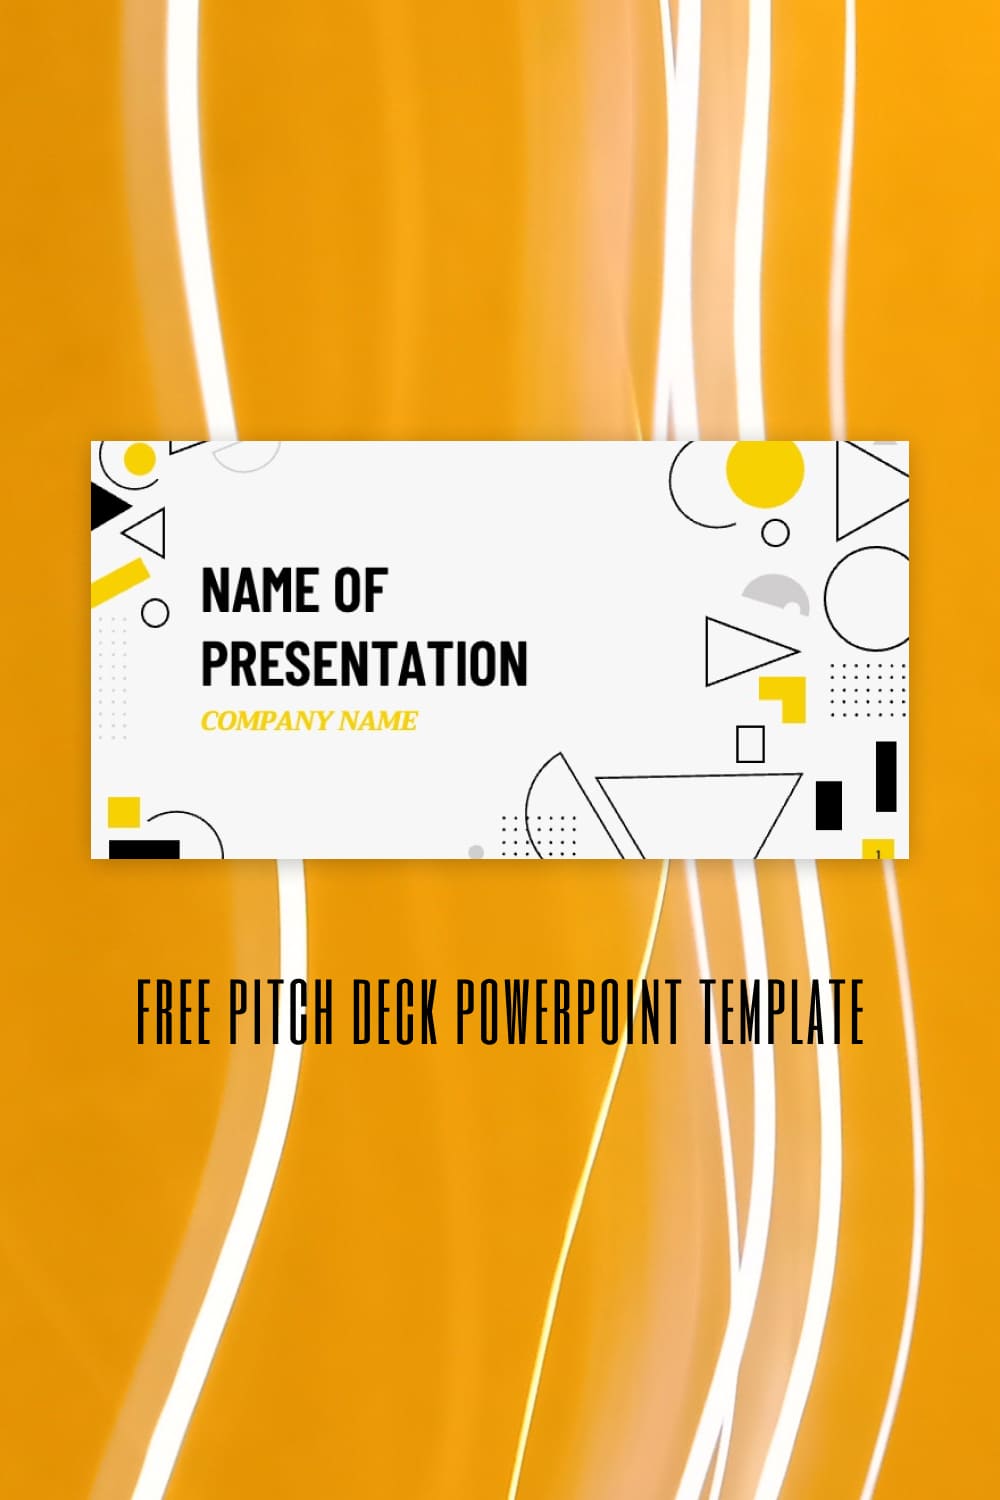 Pinterest Free Pitch Deck Powerpoint Template.